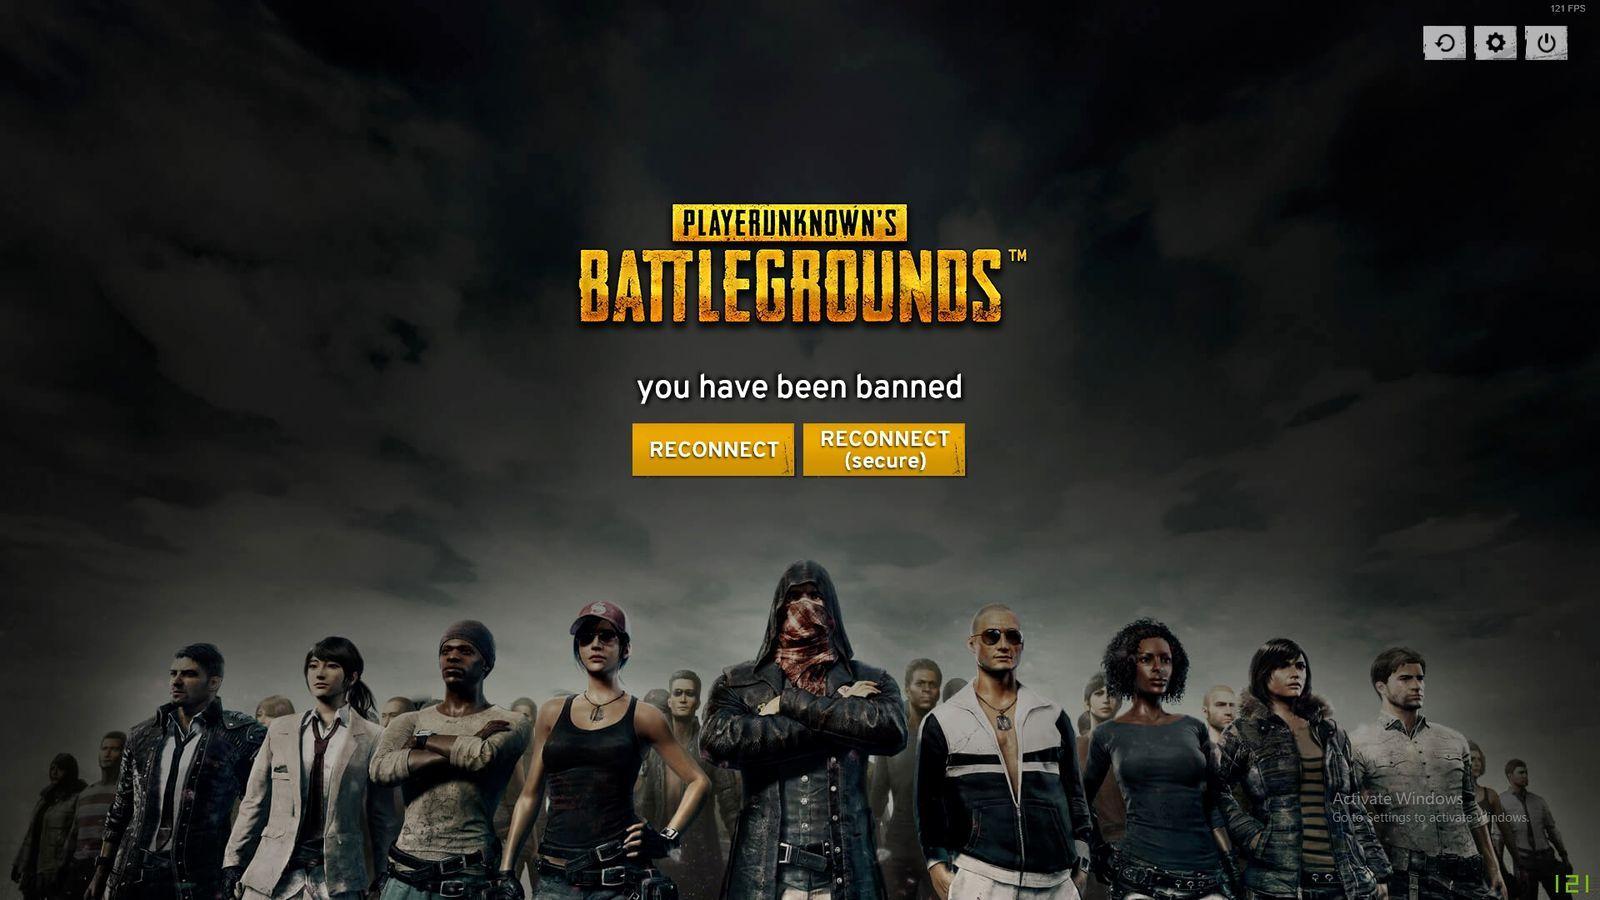 Playerunknown's Battlegrounds 'stream sniping' ban divides